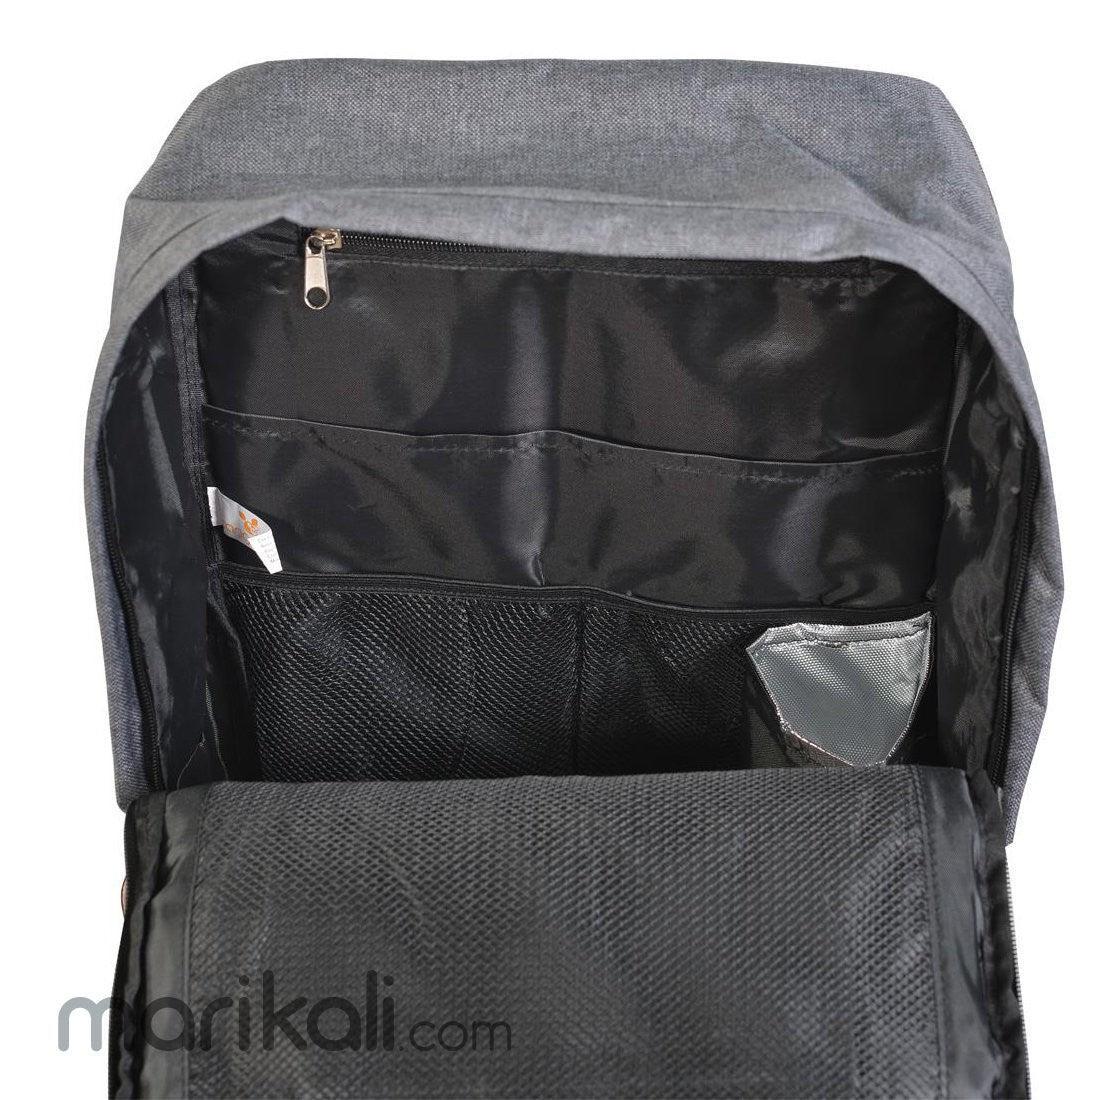 Cangaroo - Cangaroo Backpack Alice Grey - Mari Kali Stores Cyprus